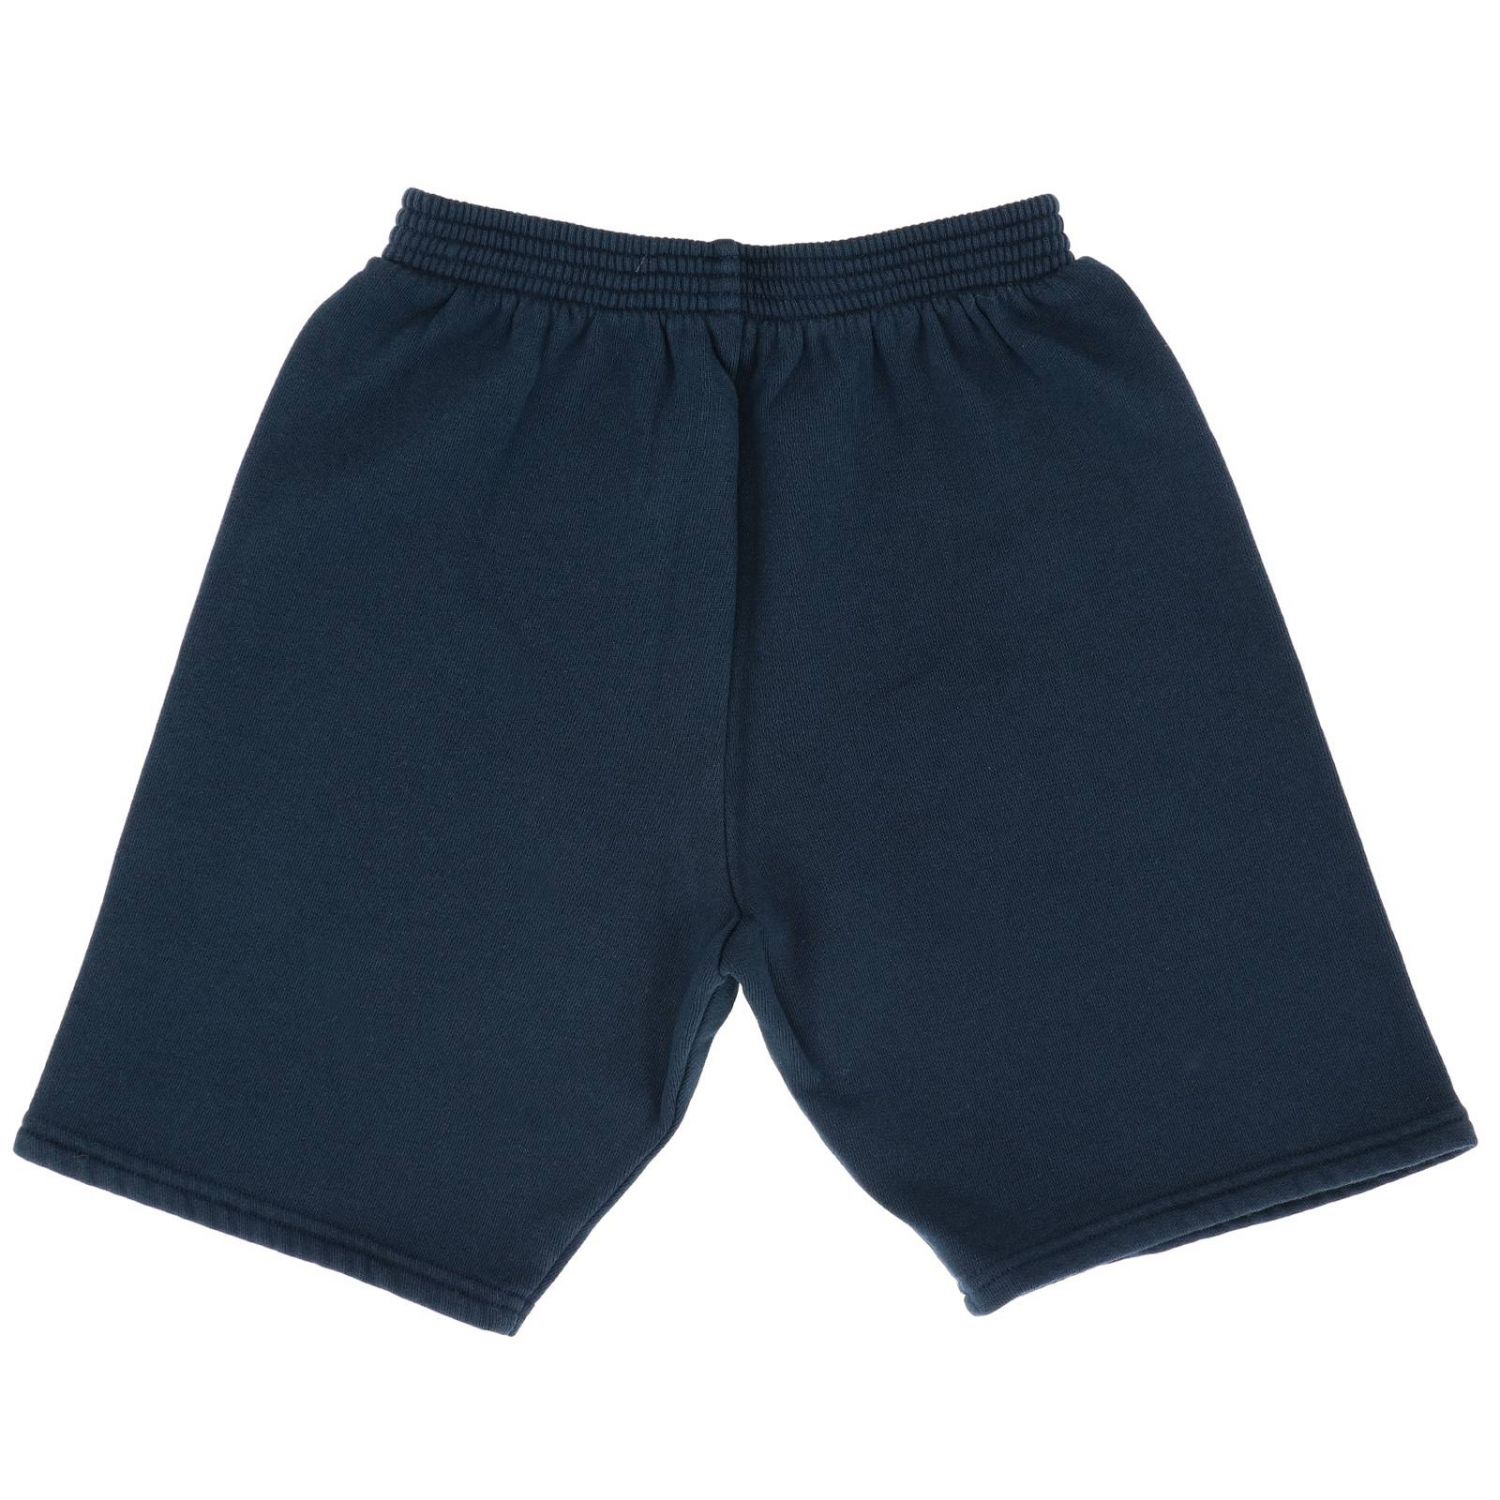 BALENCIAGA: Shorts for kids | Shorts Balenciaga Kids Blue | Shorts ...